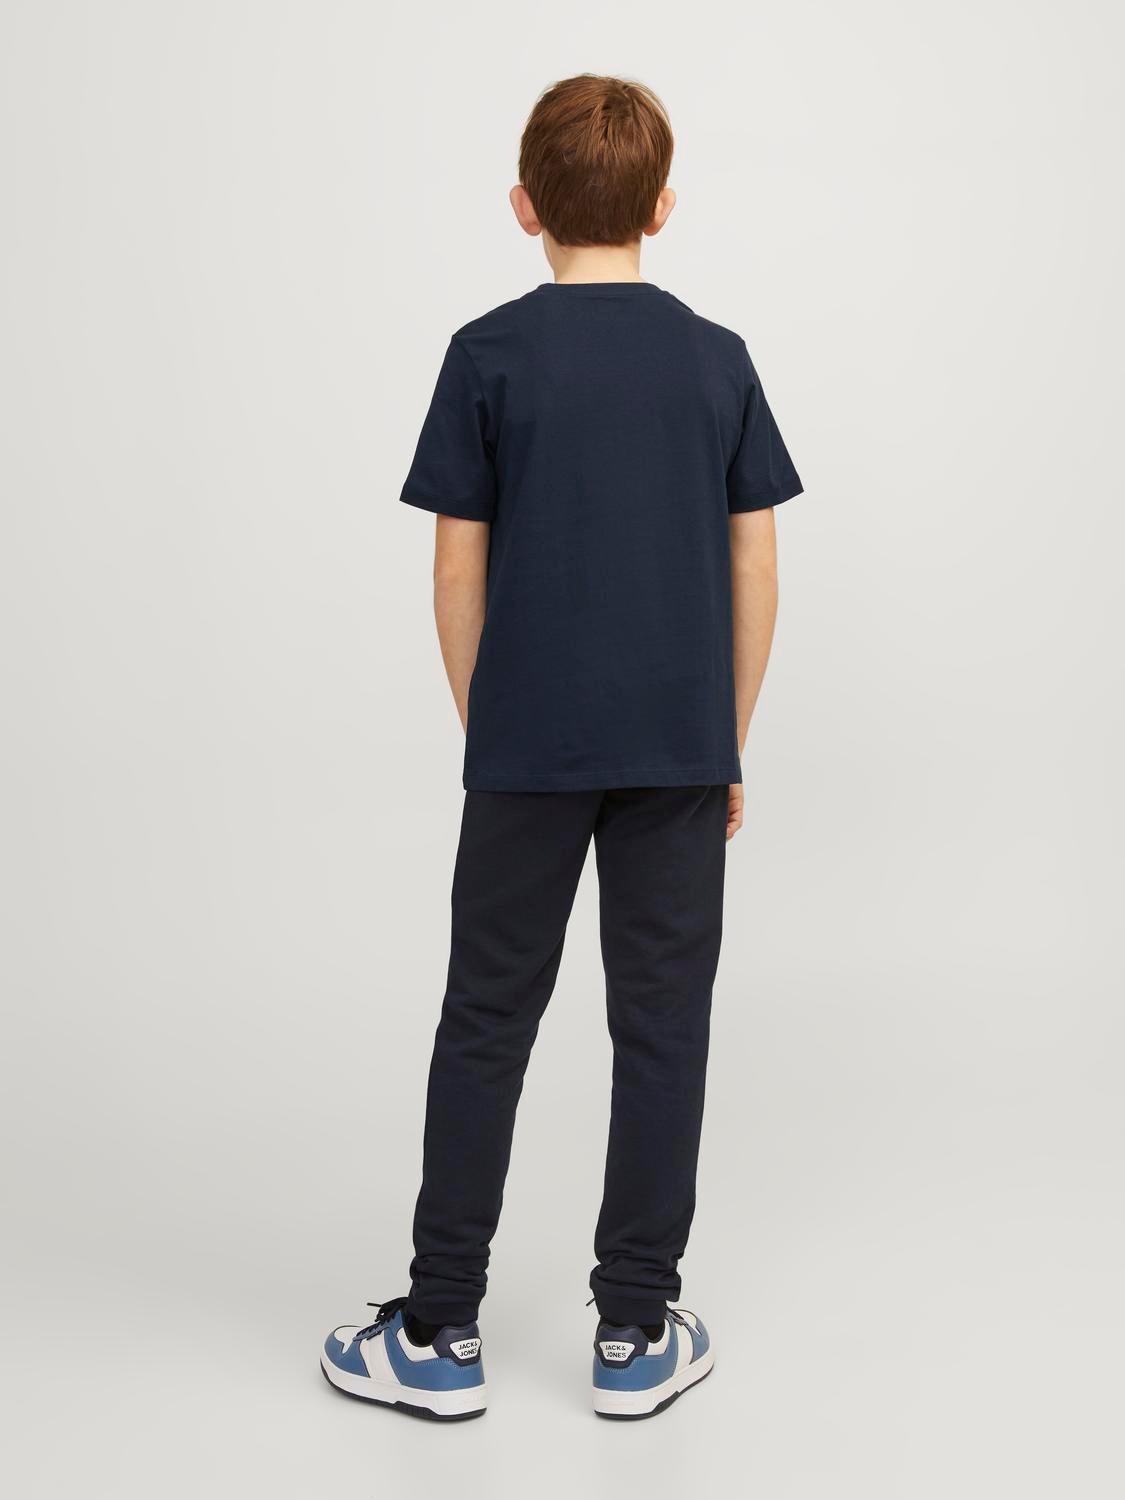 Jack & Jones T-shirt Estampar Mini -Navy Blazer - 12257379